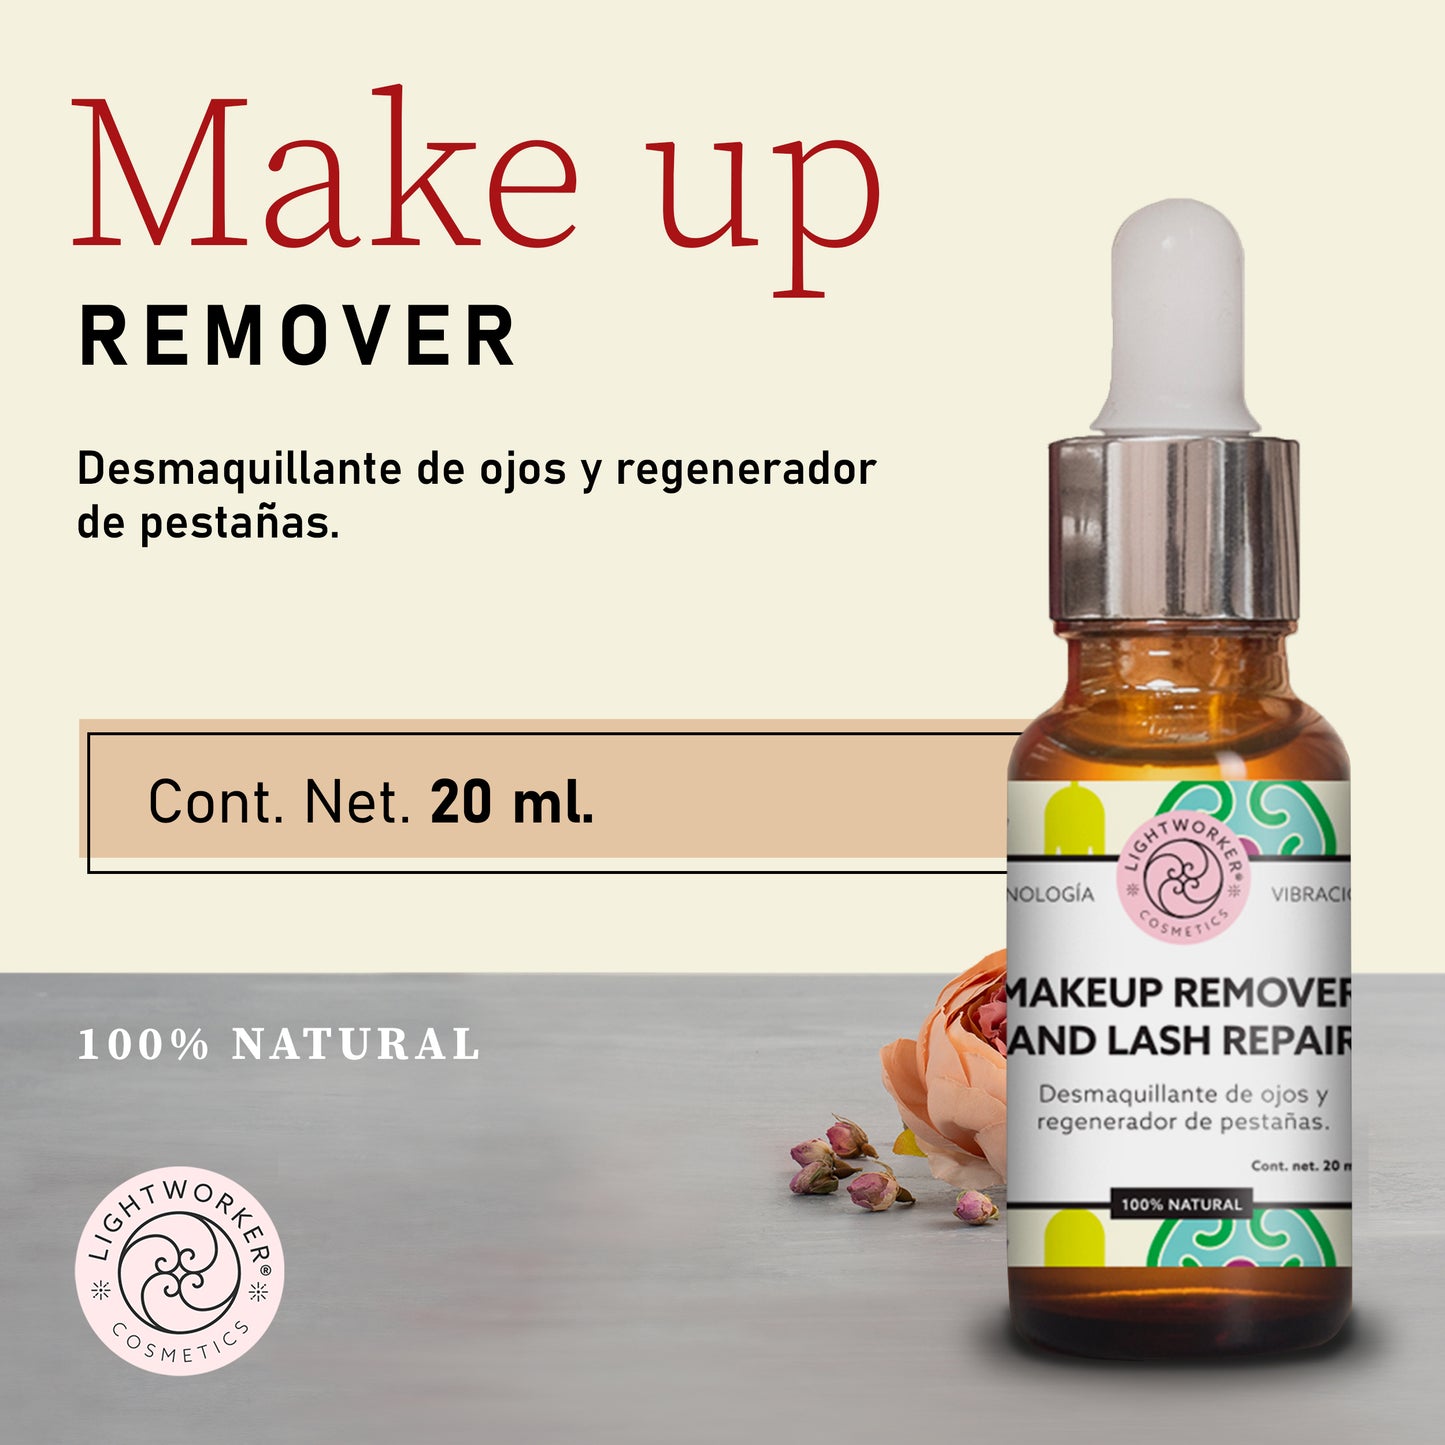 Make Up Remover & Lash Repair/ Desmaquillante